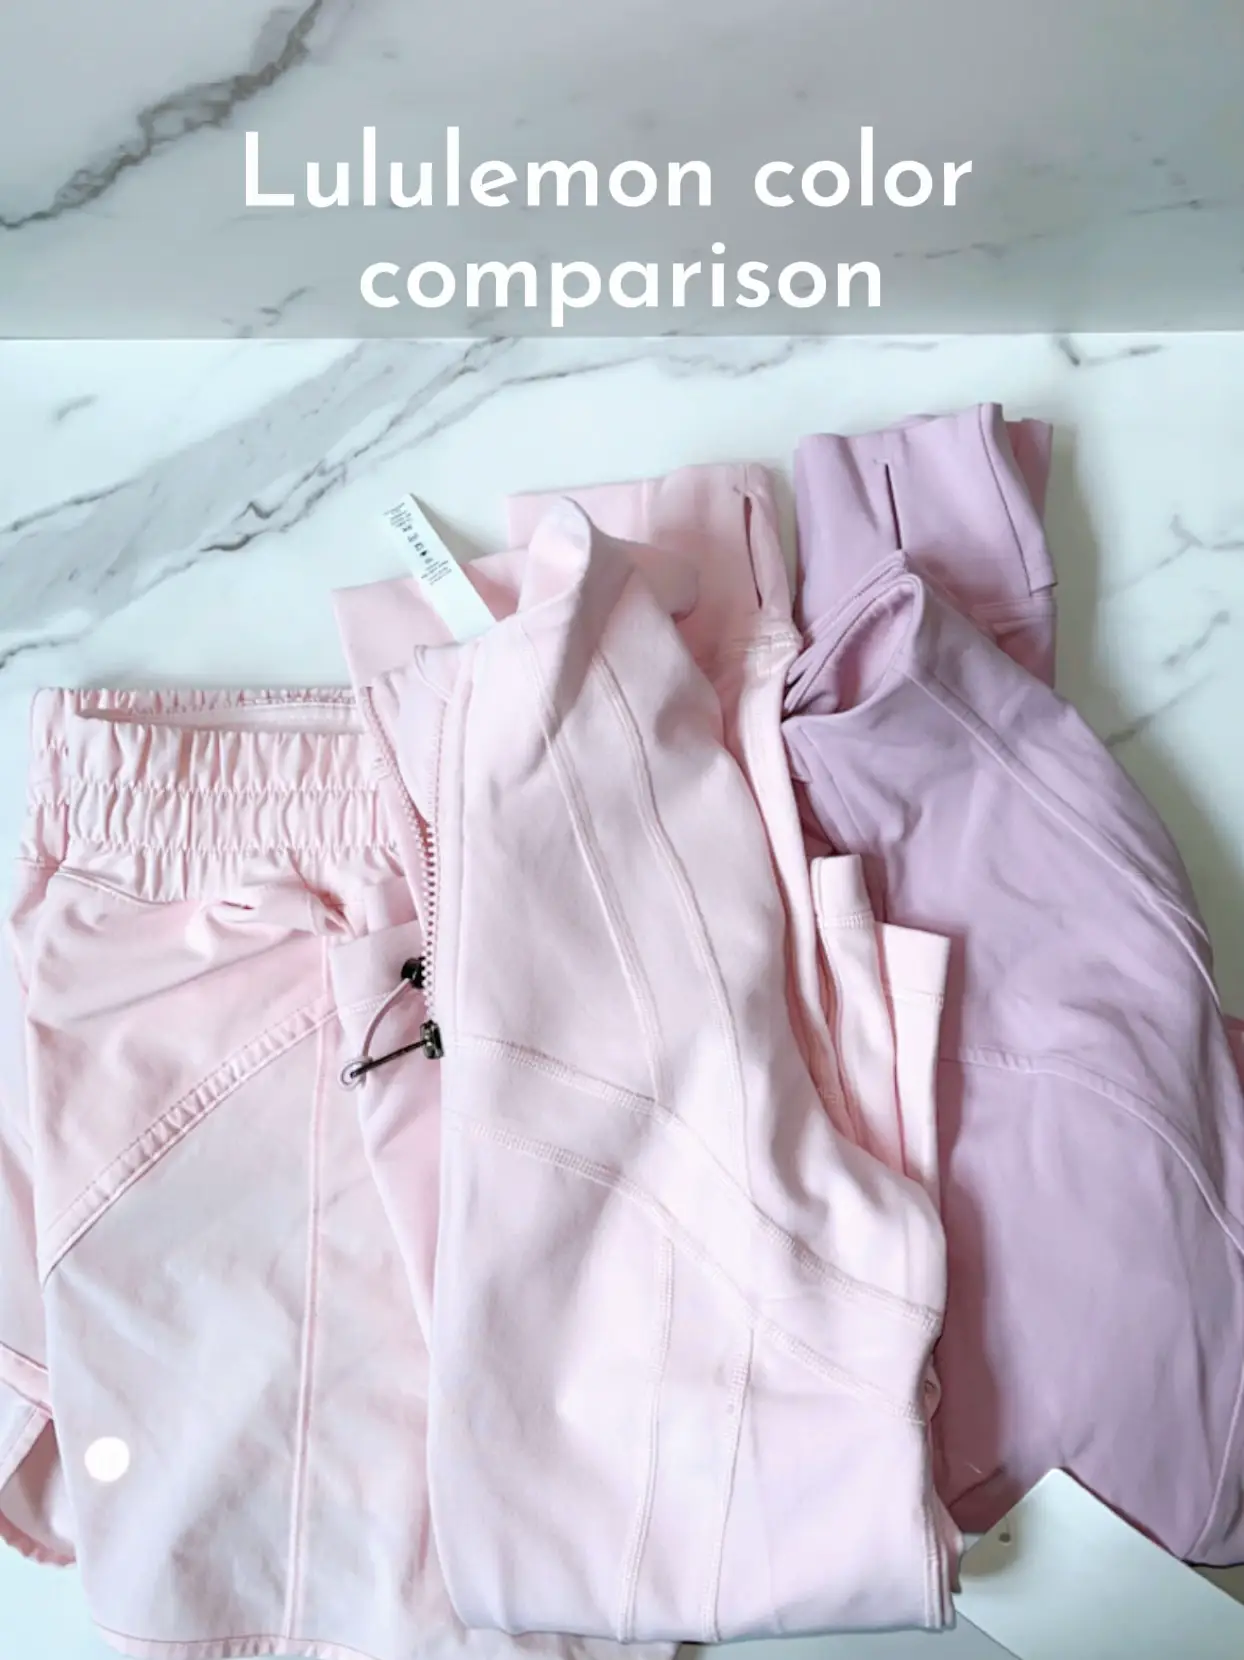 Flush pink vs strawberry milkshake vs pink mist comparison : r/lululemon